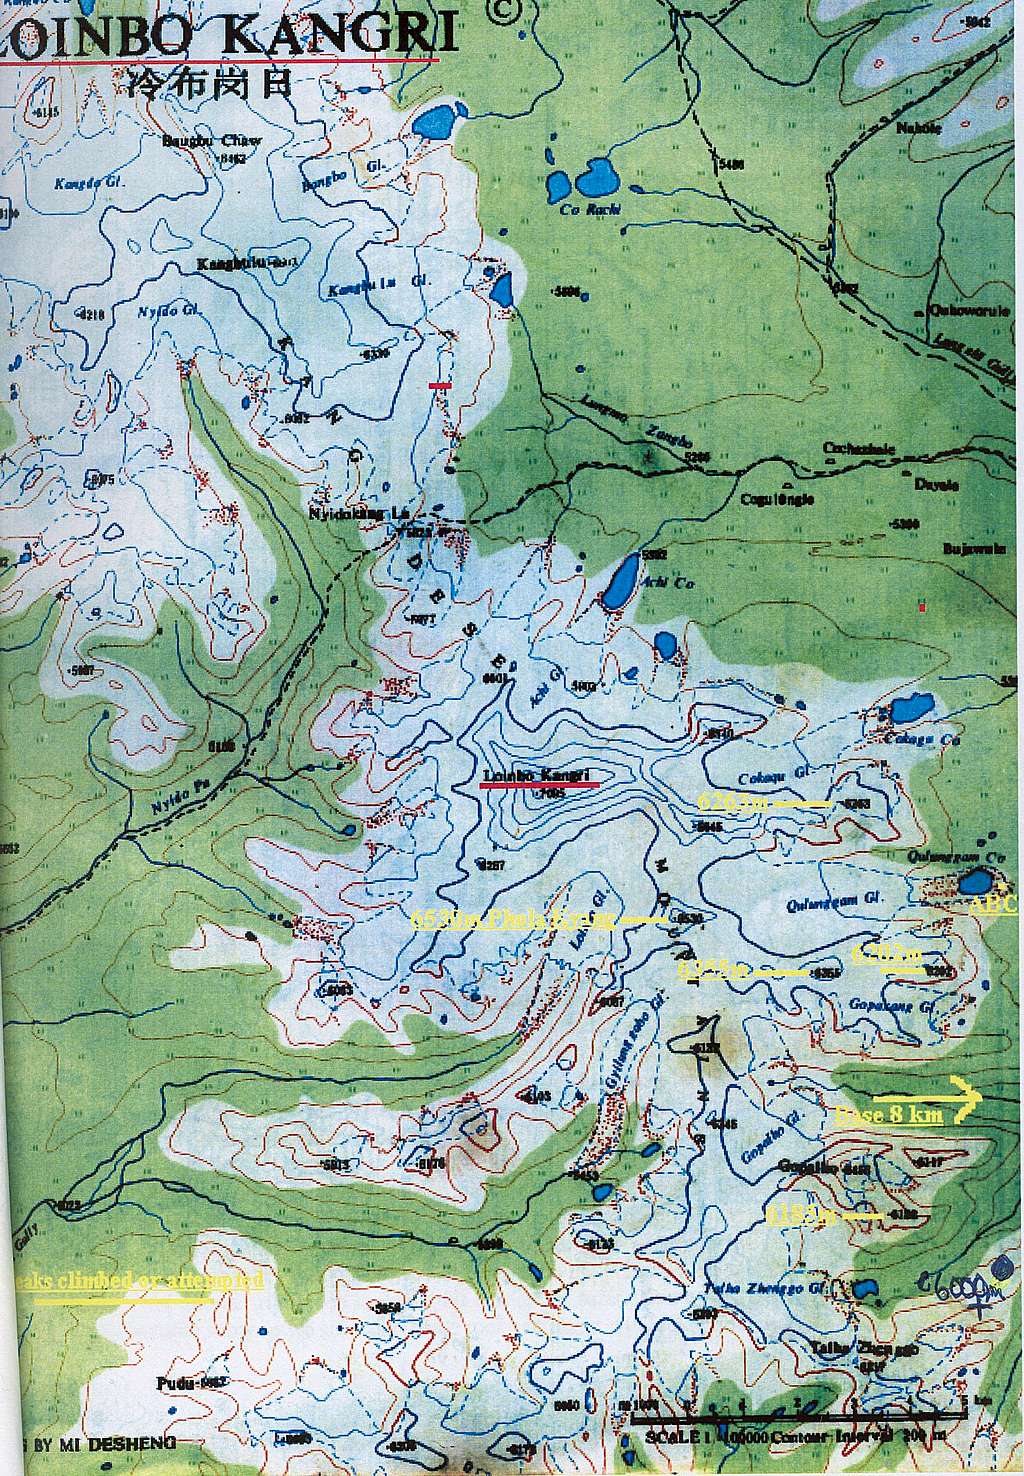 Loinbo Kangri map